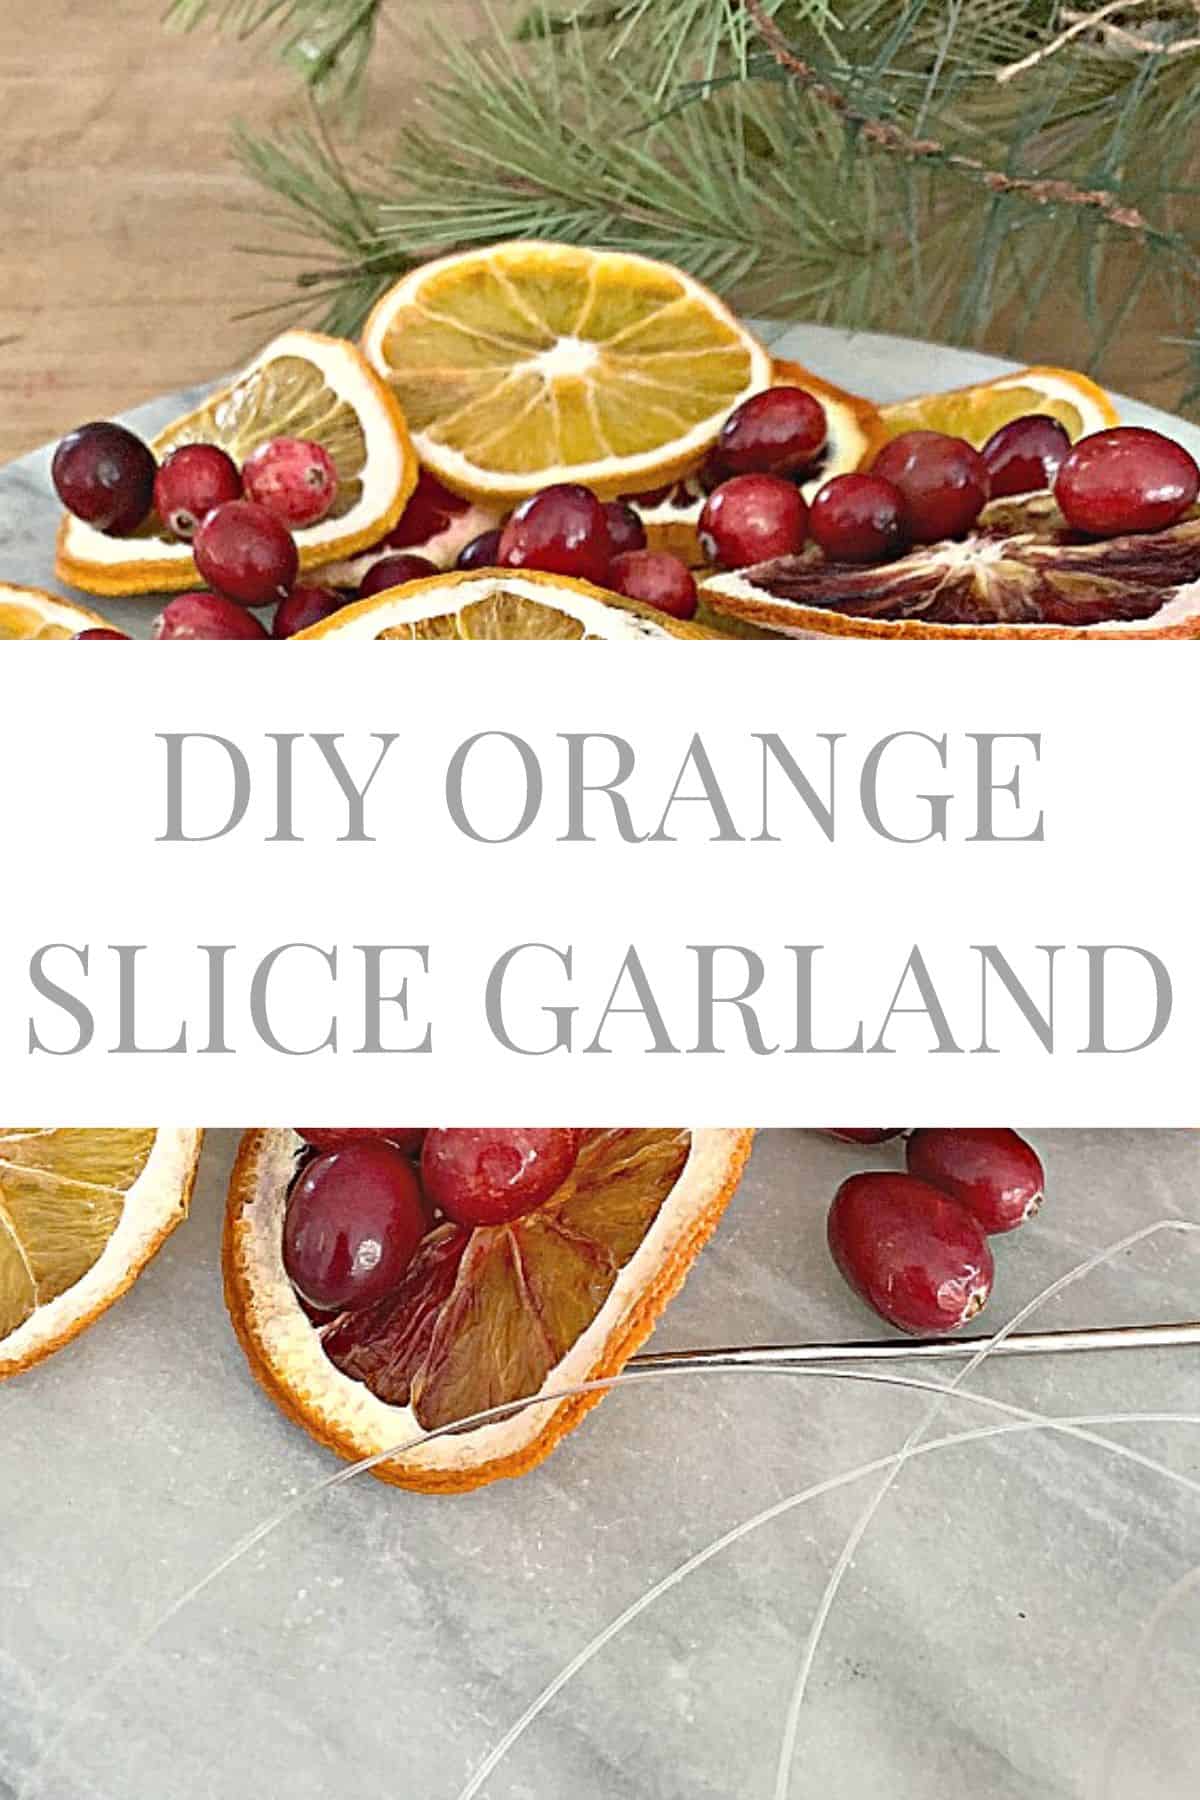 dried orange slices for DIY range slice garland and large graphic